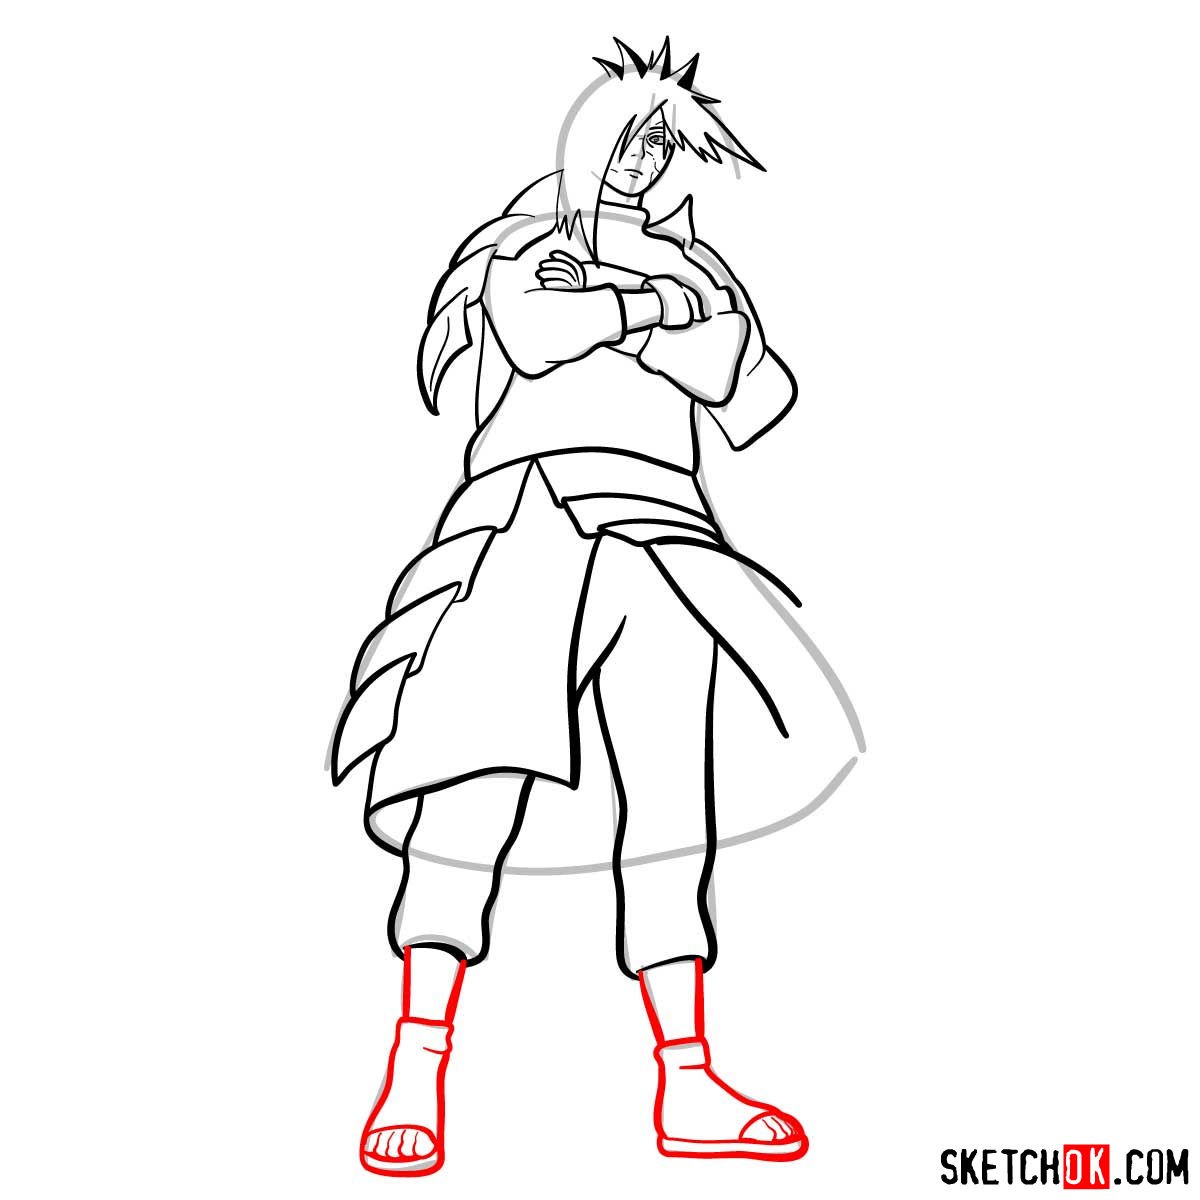 How to draw Madara Uchiha from Naruto anime - step 12